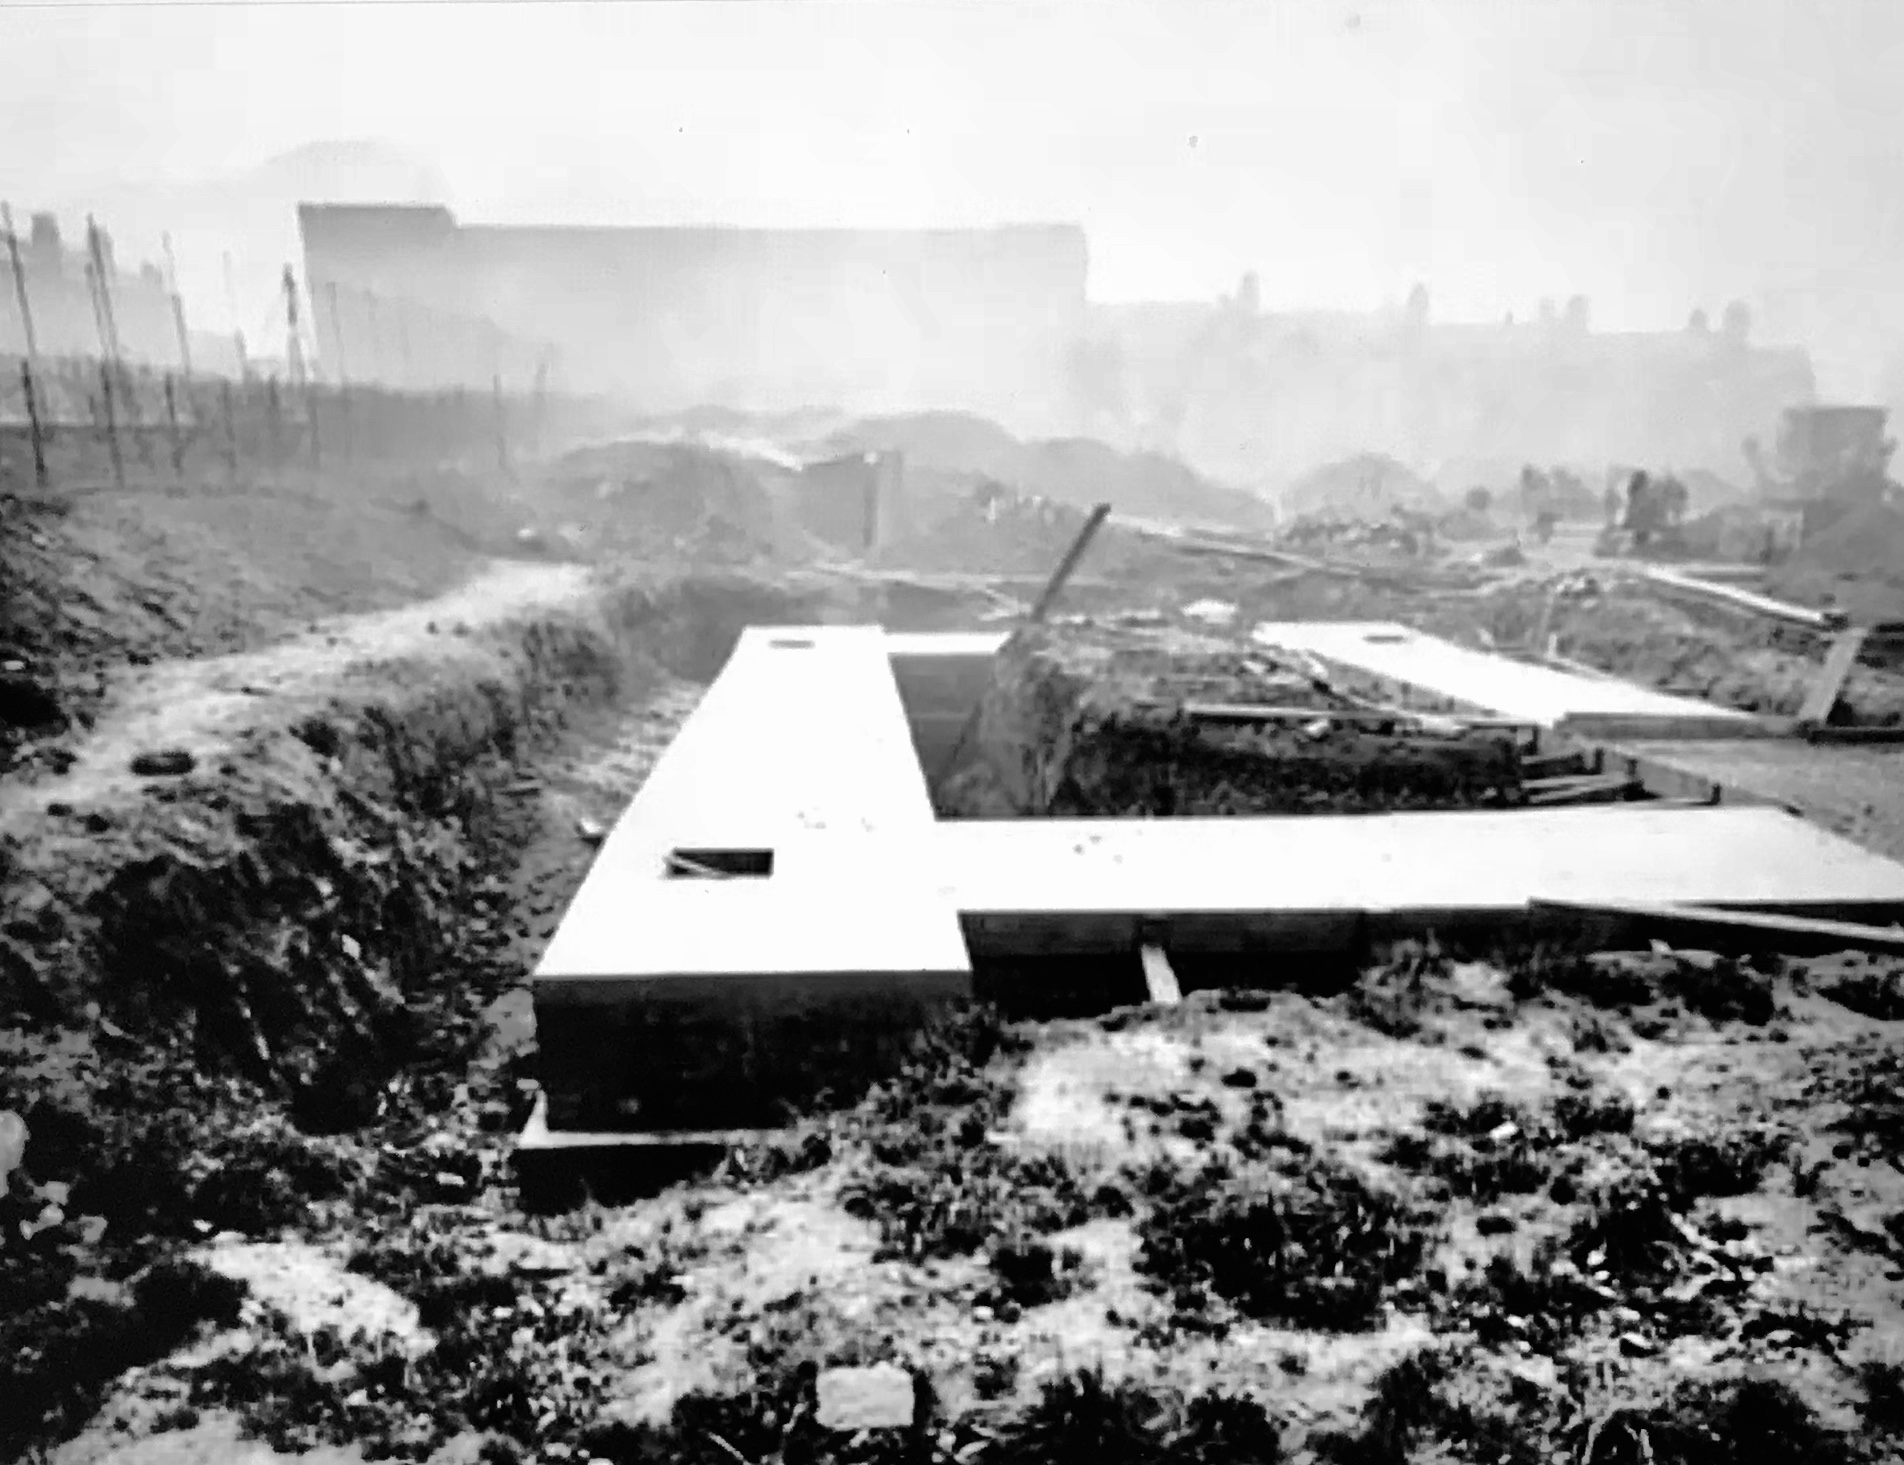 World War II Air Raid Shelters, Woodhouse Moor, undated